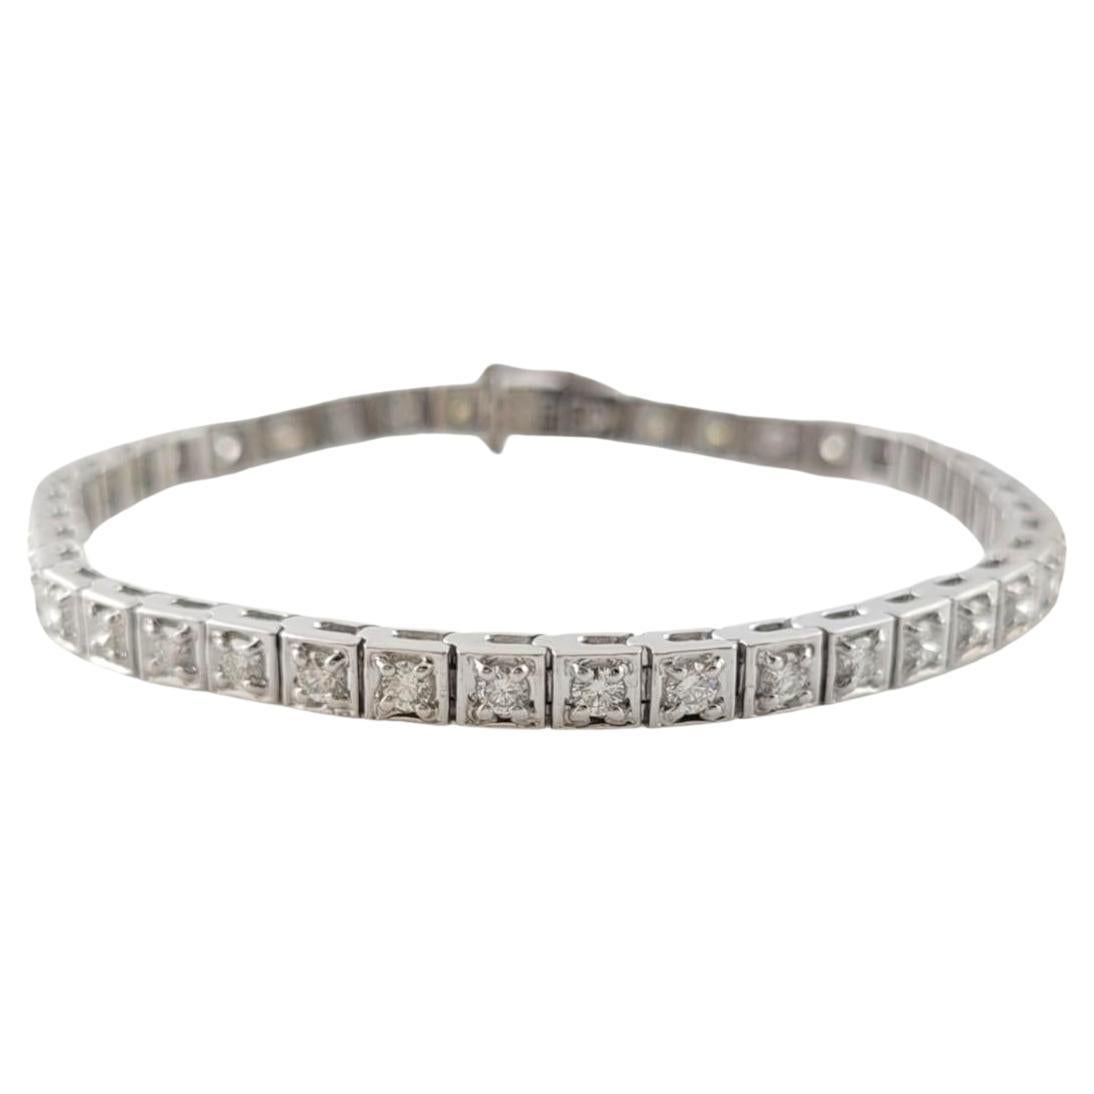 Bracelet tennis en or blanc 14 carats avec diamants 2,5 TCW. n° 16966